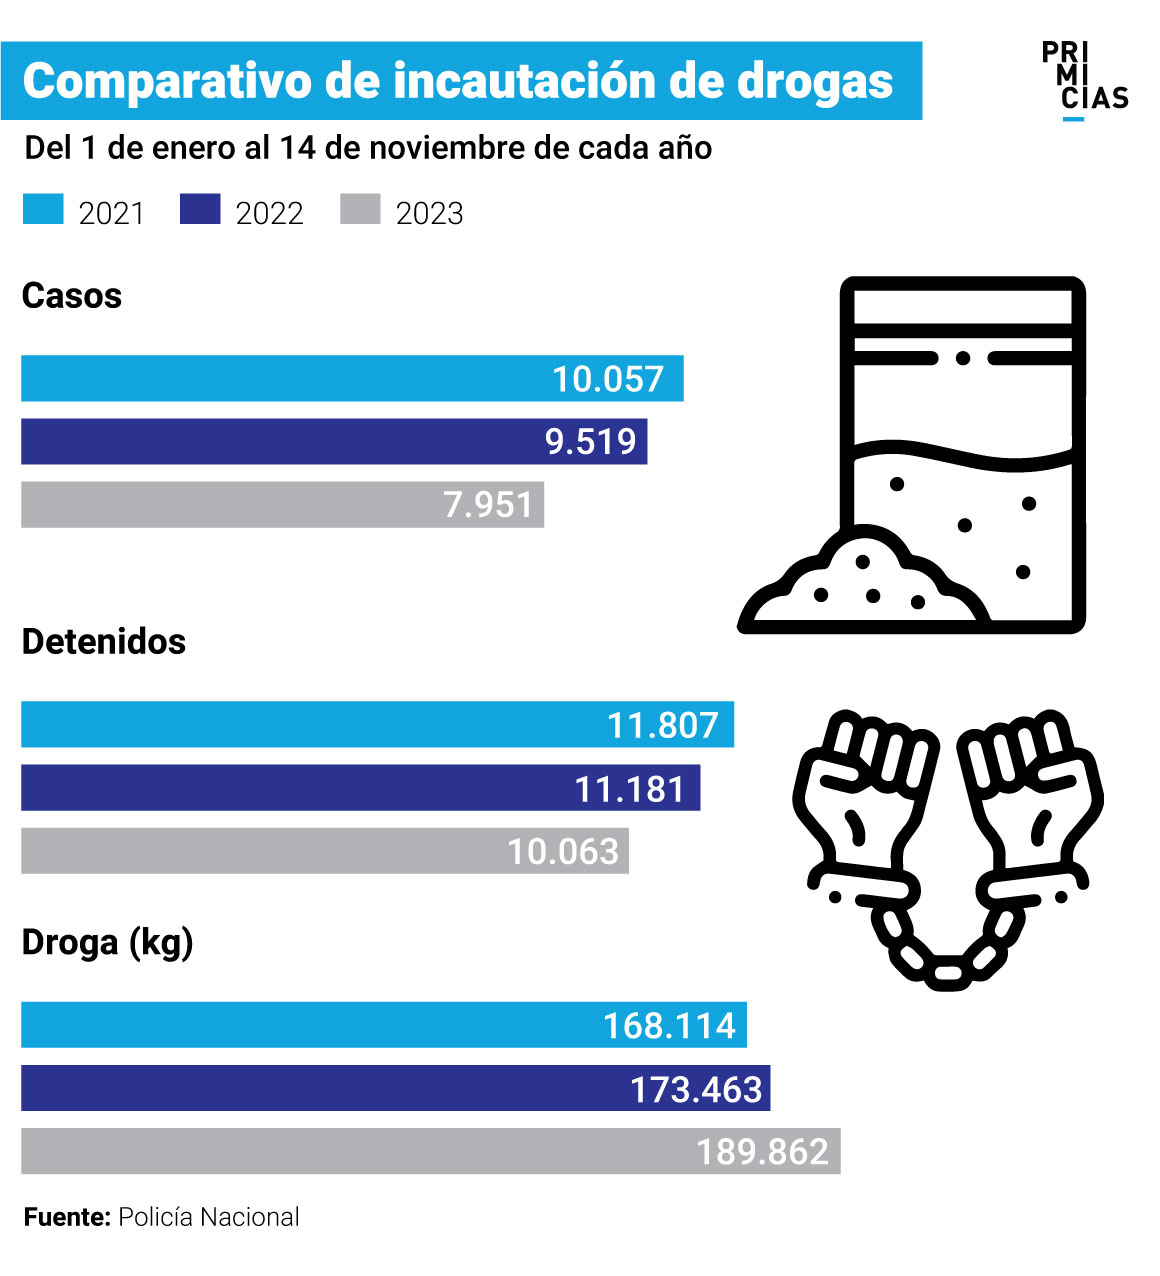 Incautación de drogas en Ecuador 2021-2023